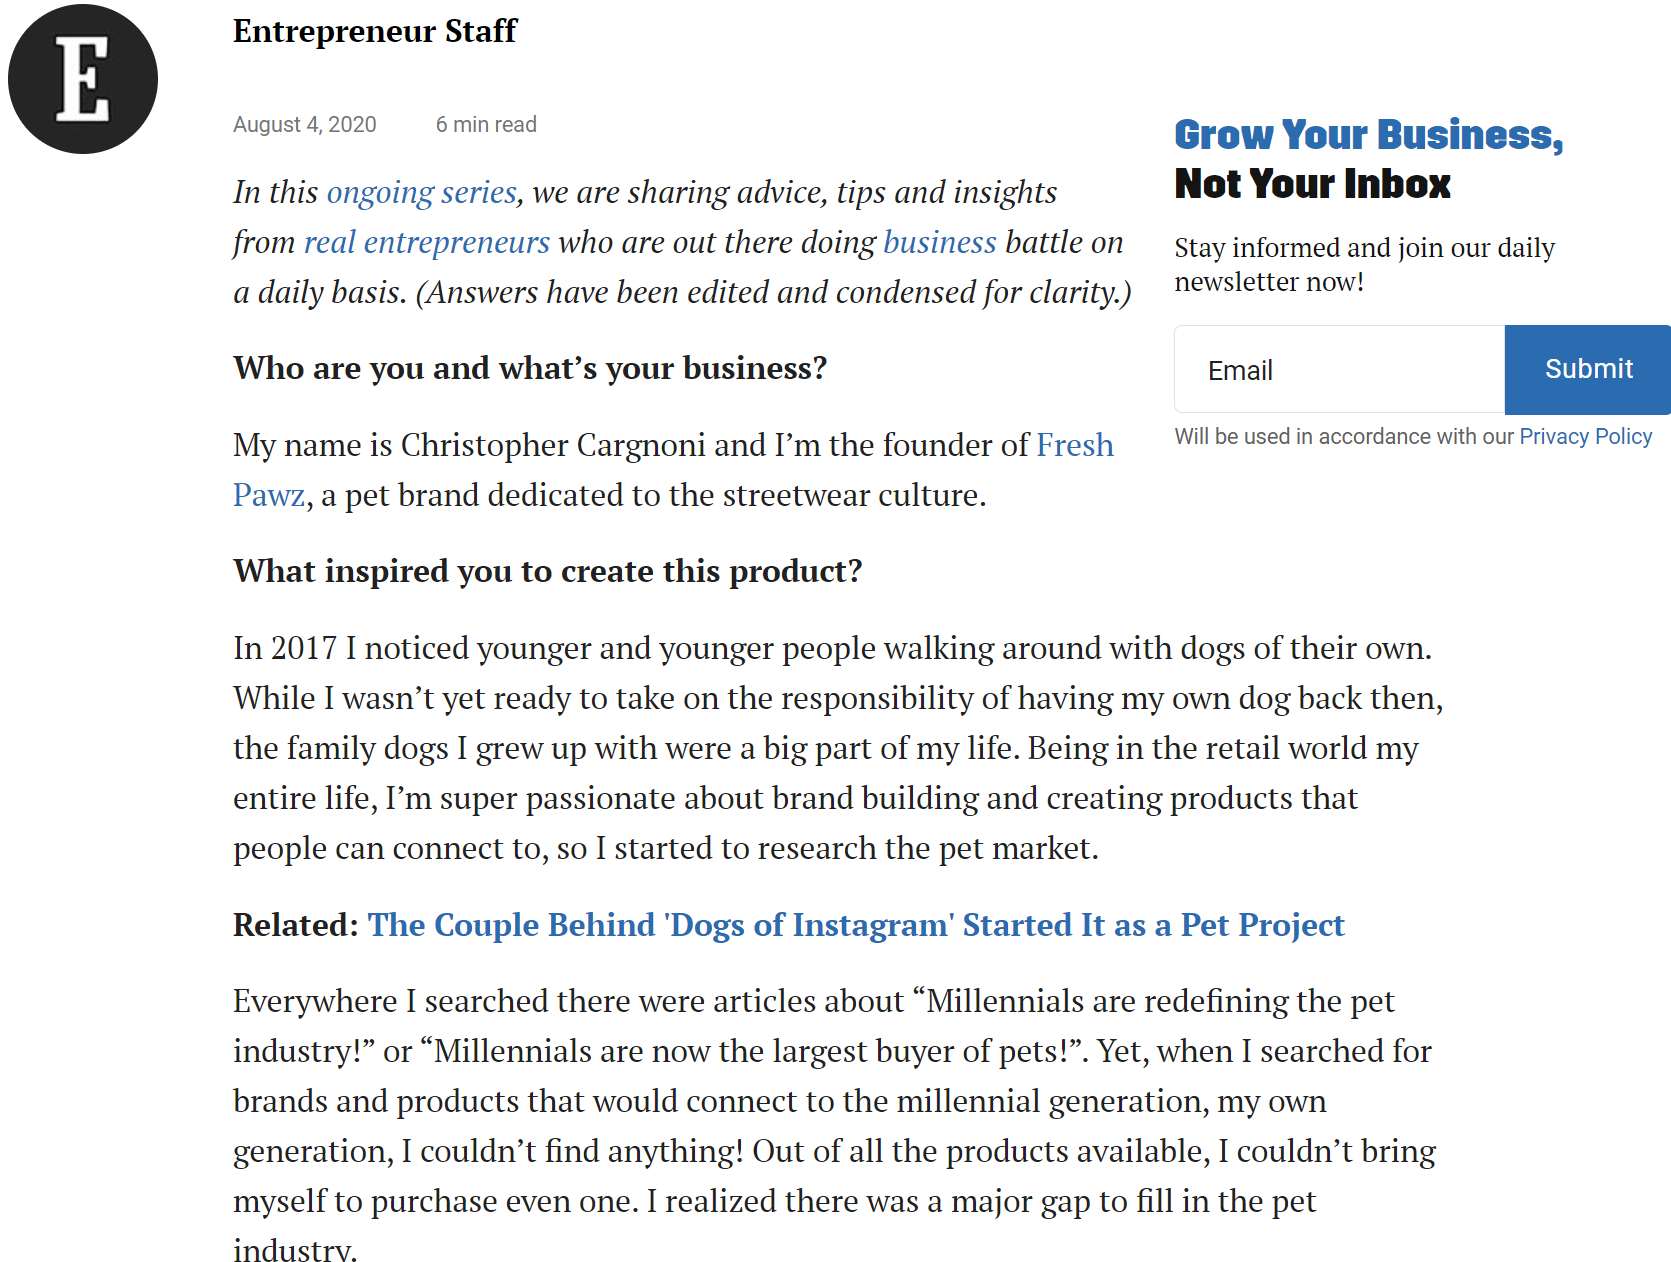 Excerpt of Freshpawz Entrepreneur Feature